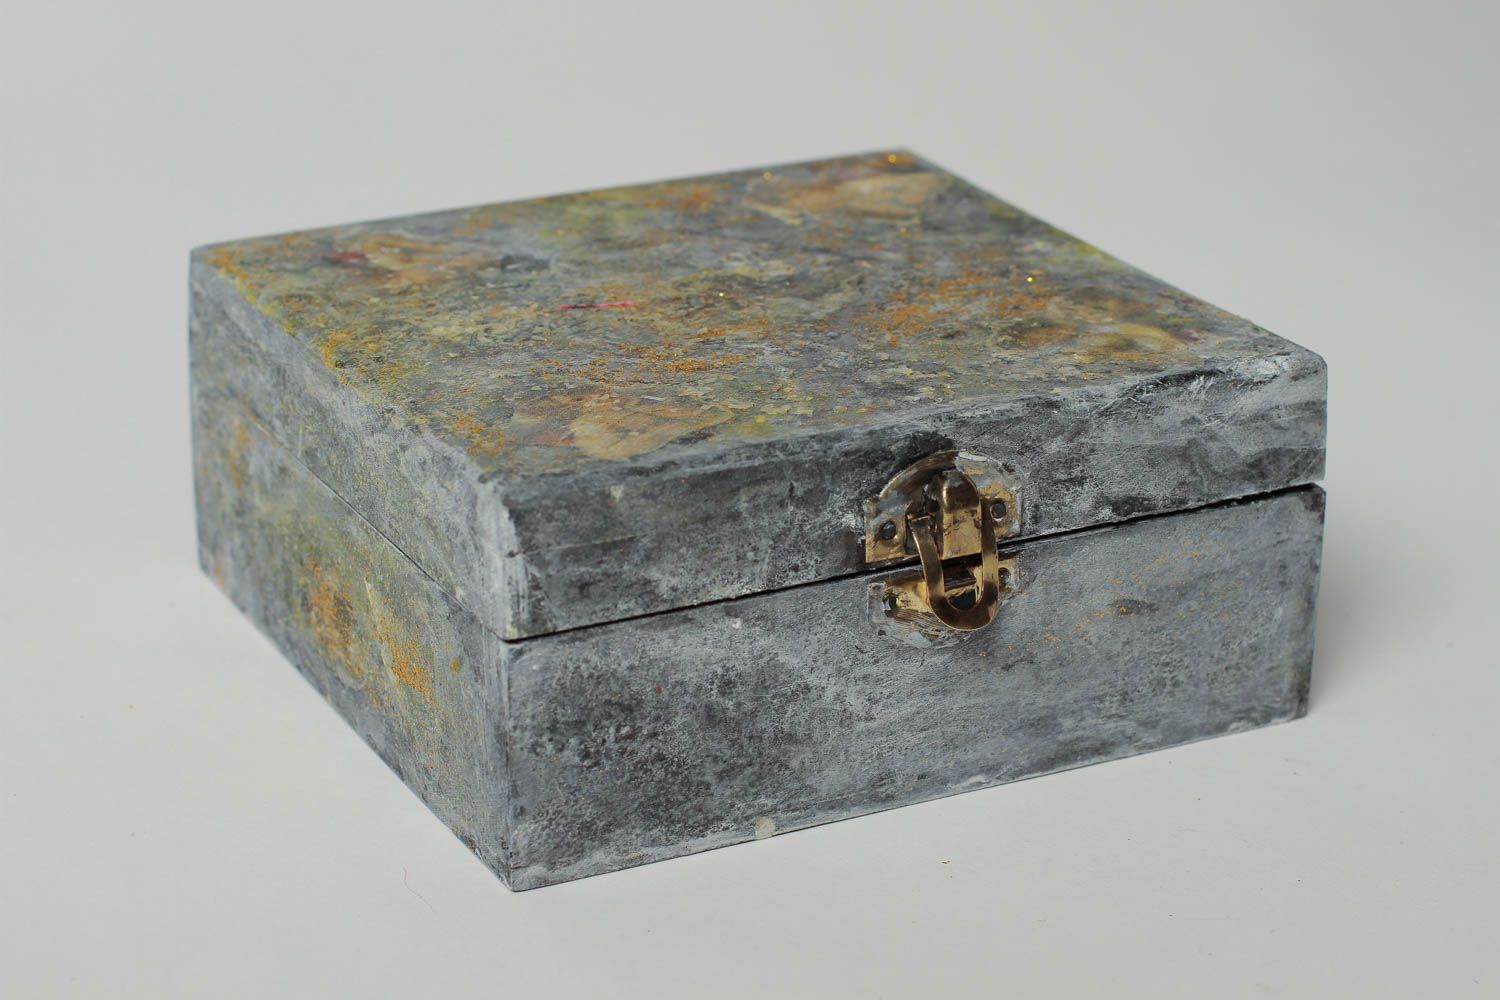 Beautiful handmade wooden box jewelry box design decoupage ideas wood craft photo 3